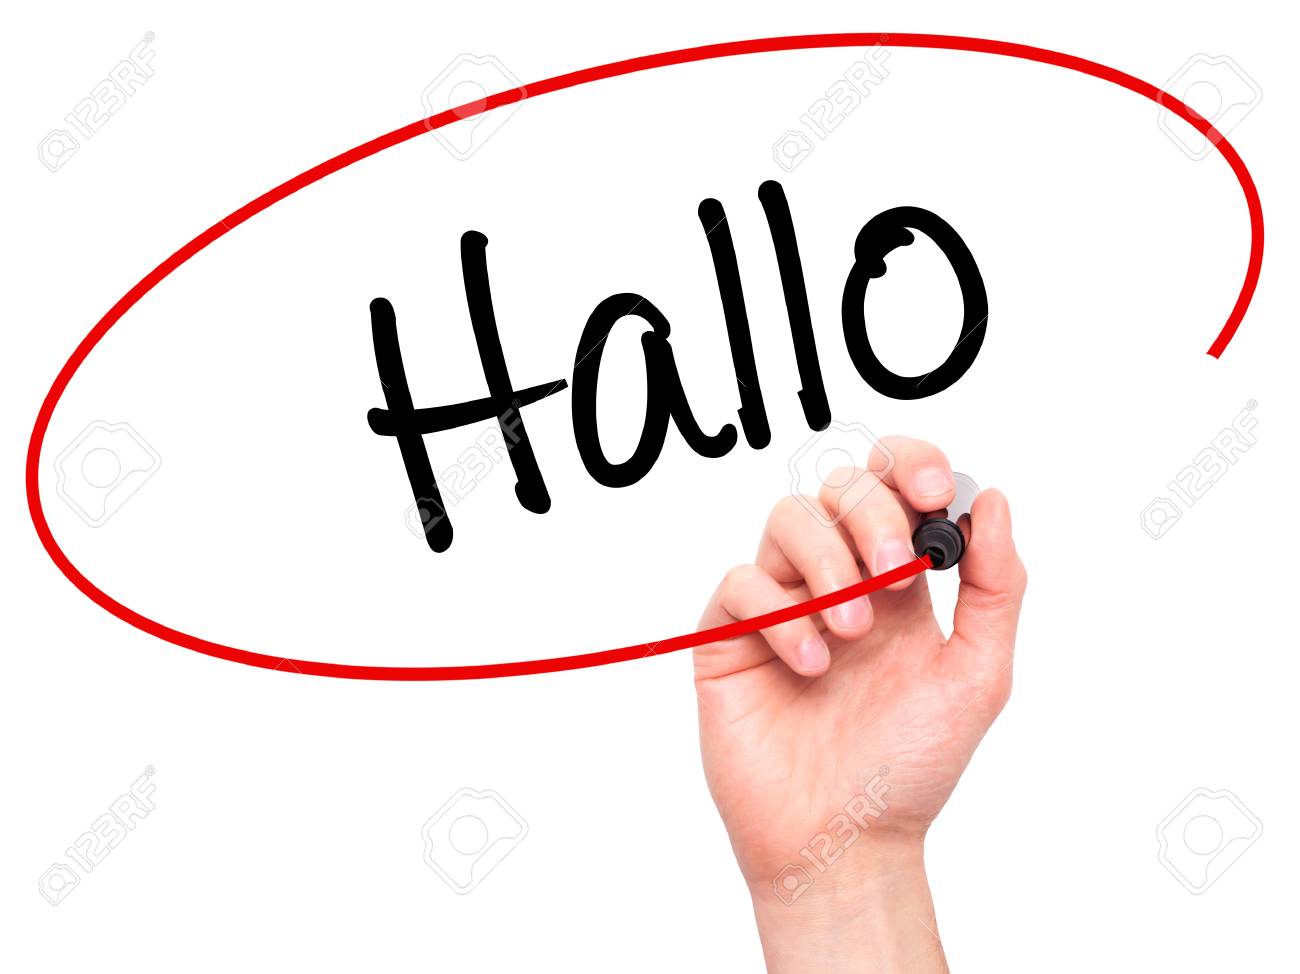 Cara Menyapa Dalam Bahasa Inggris Selain “Hello” & “How are you?”